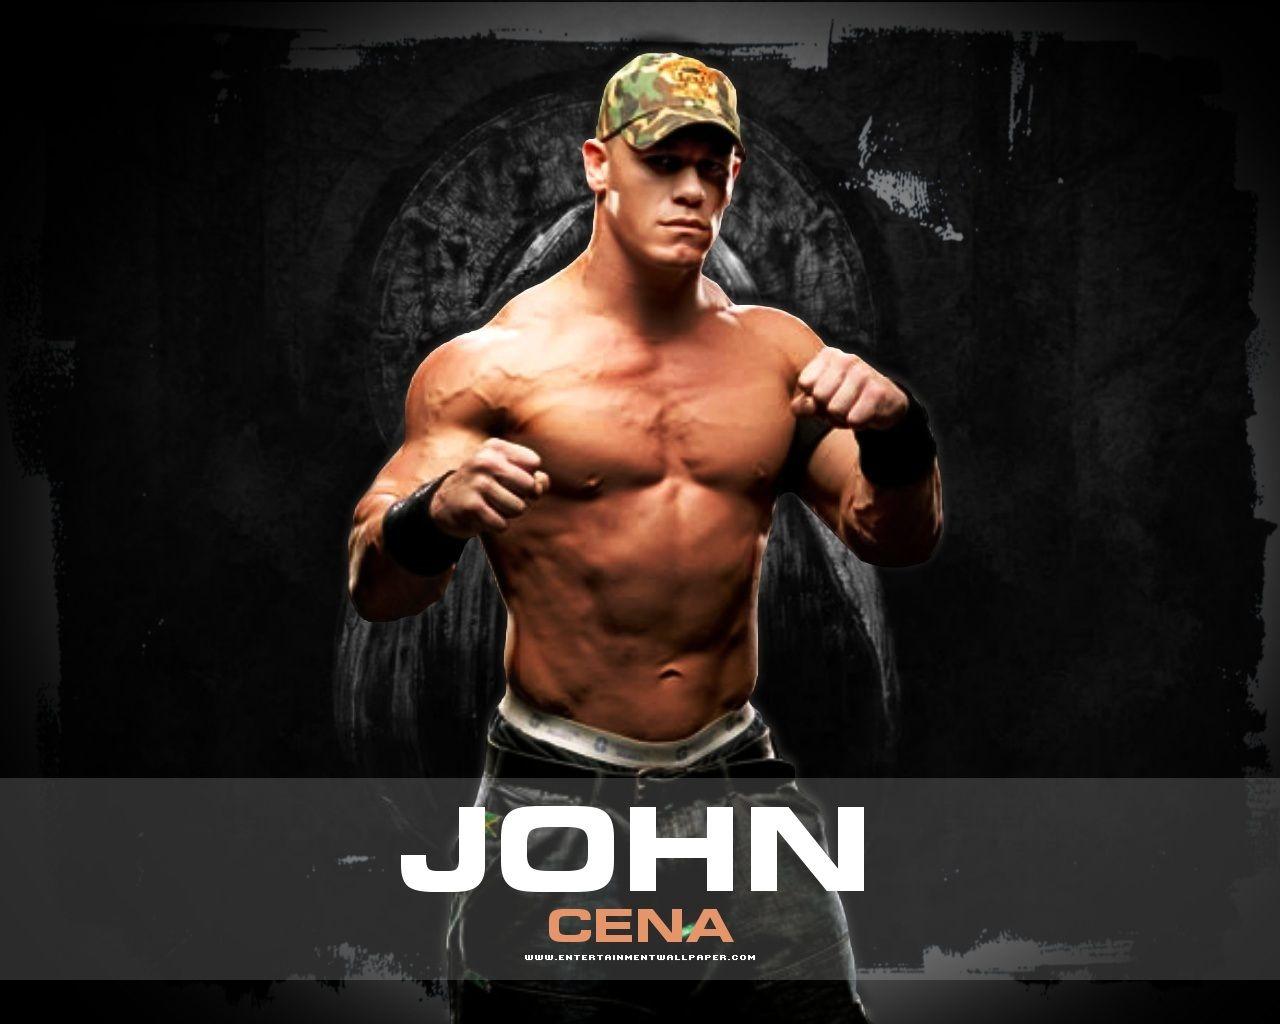 Best John Cena Full HD Image 2017 Pics Widescreen High Quality